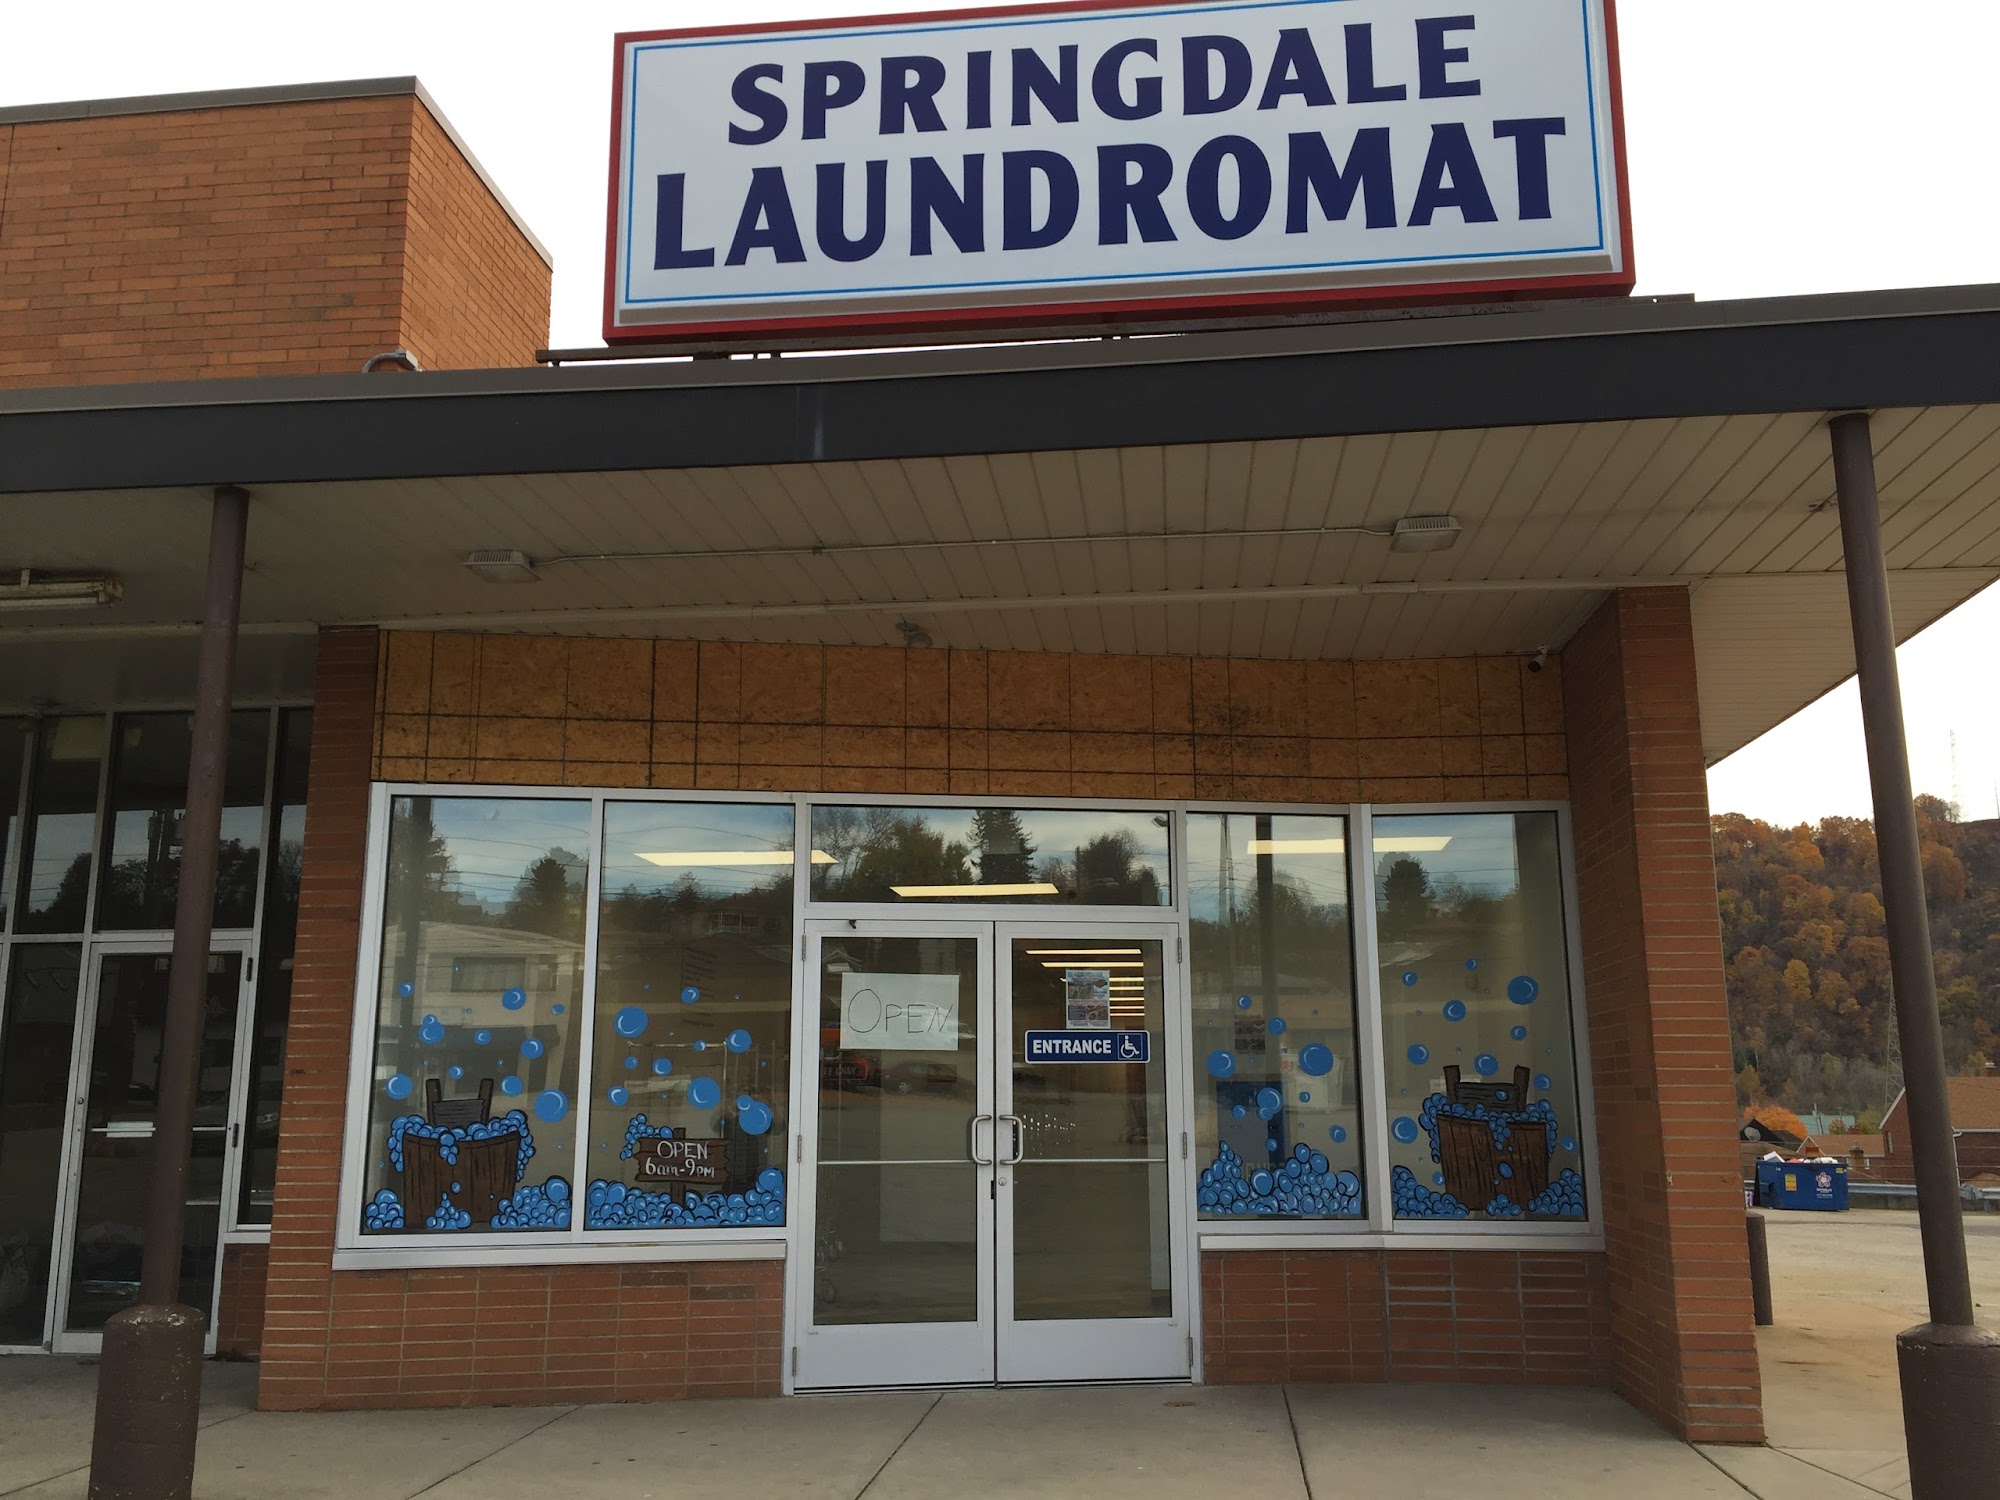 Springdale Laundromat 494 Pittsburgh St, Springdale Pennsylvania 15144